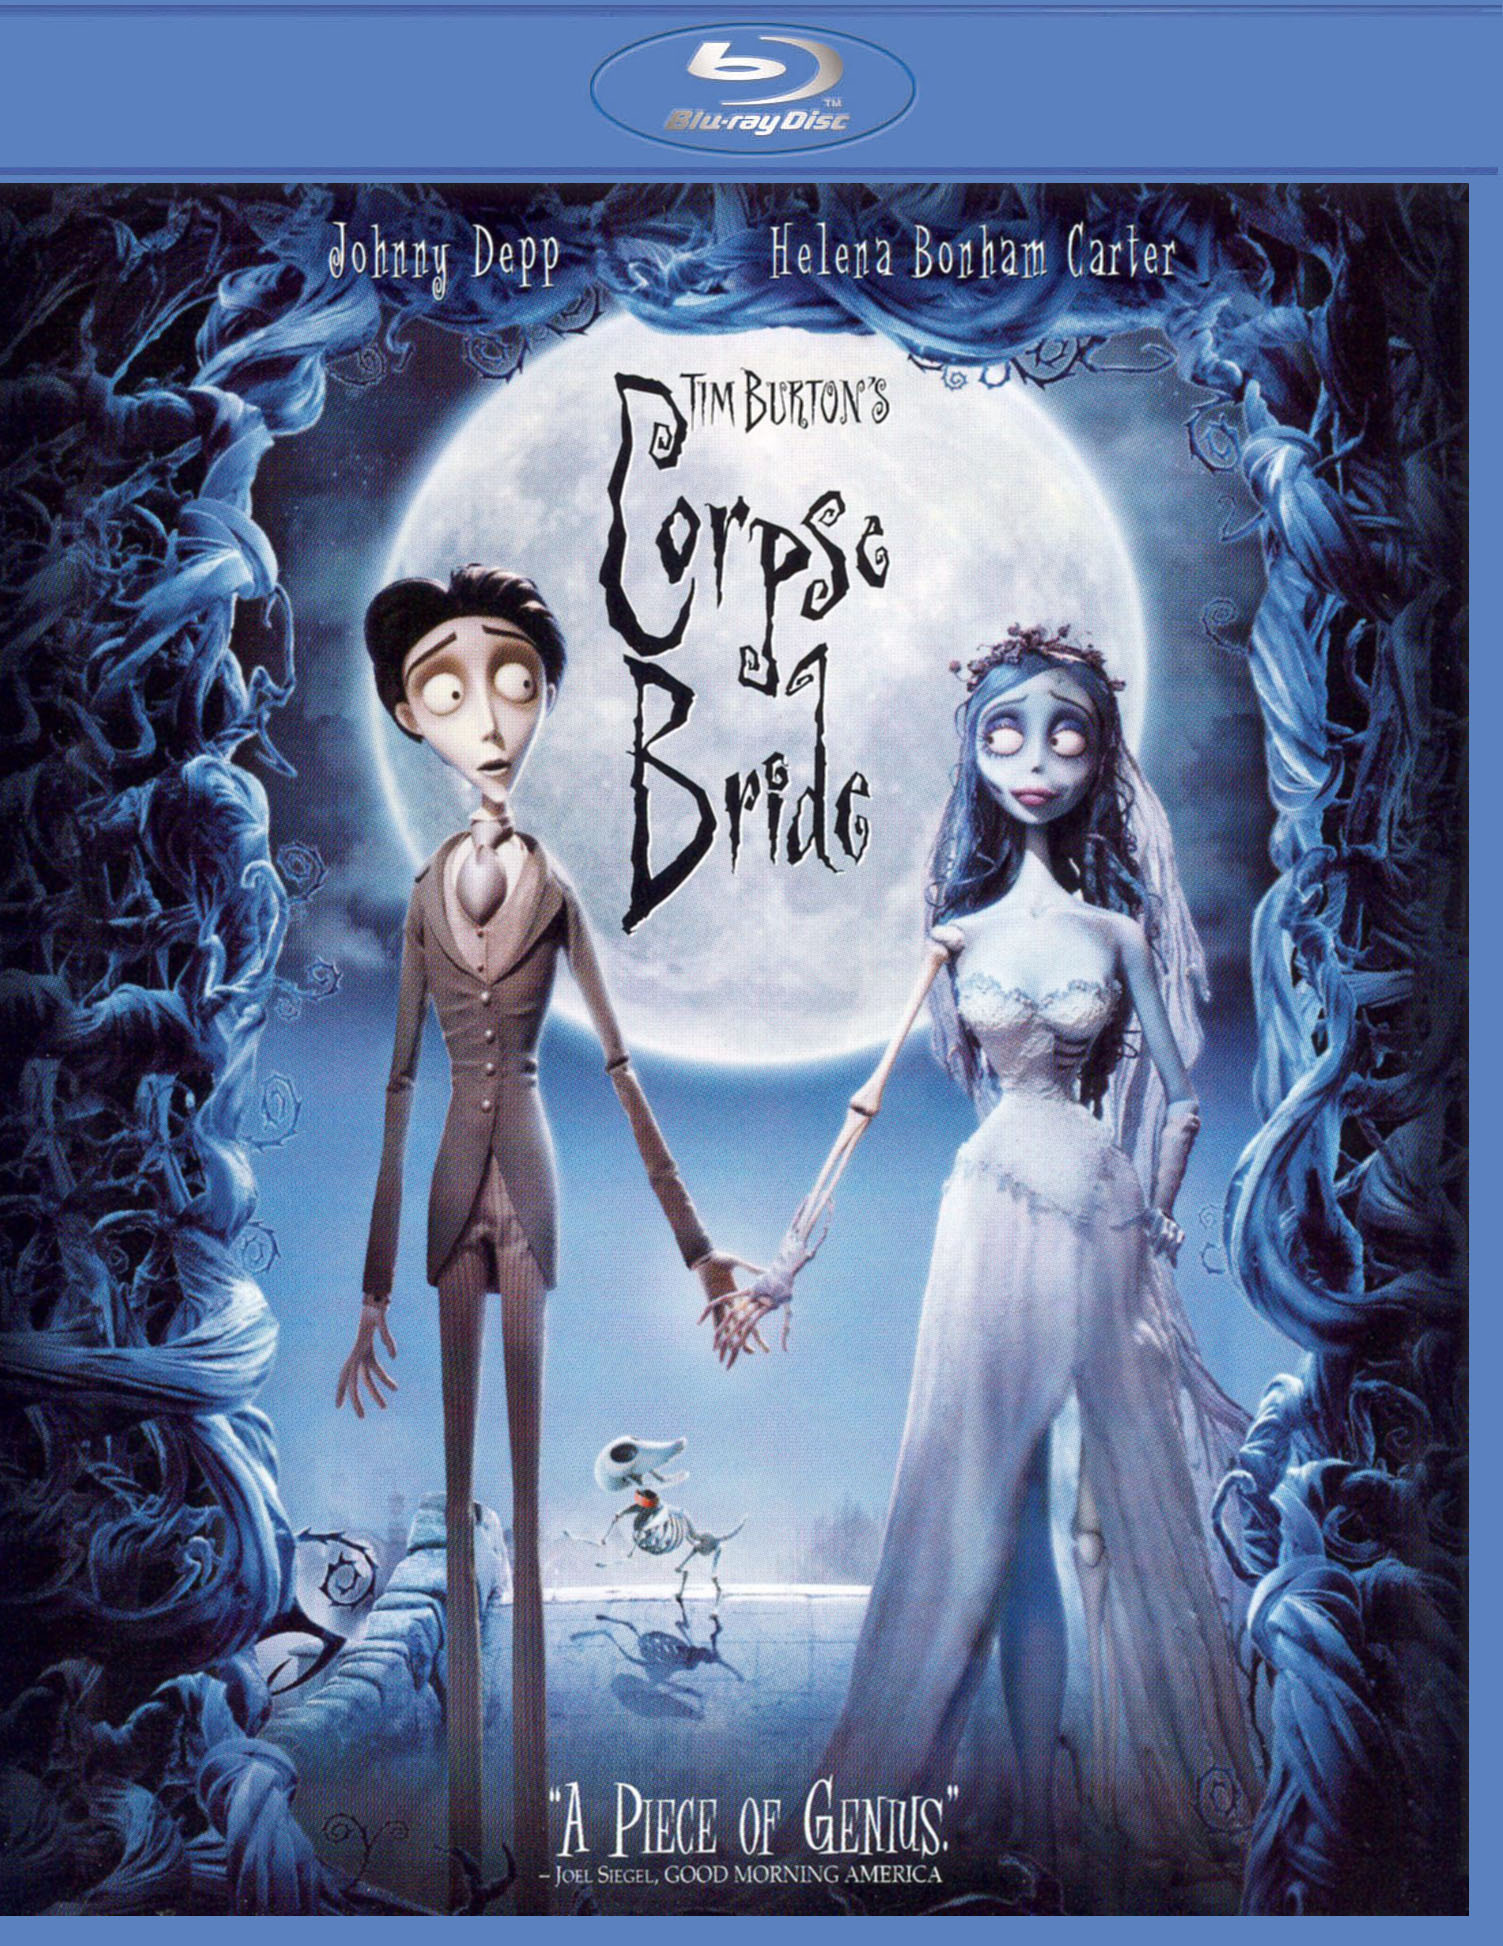 Tim Corpse Bride [Blu-ray] [2005] - Best Buy